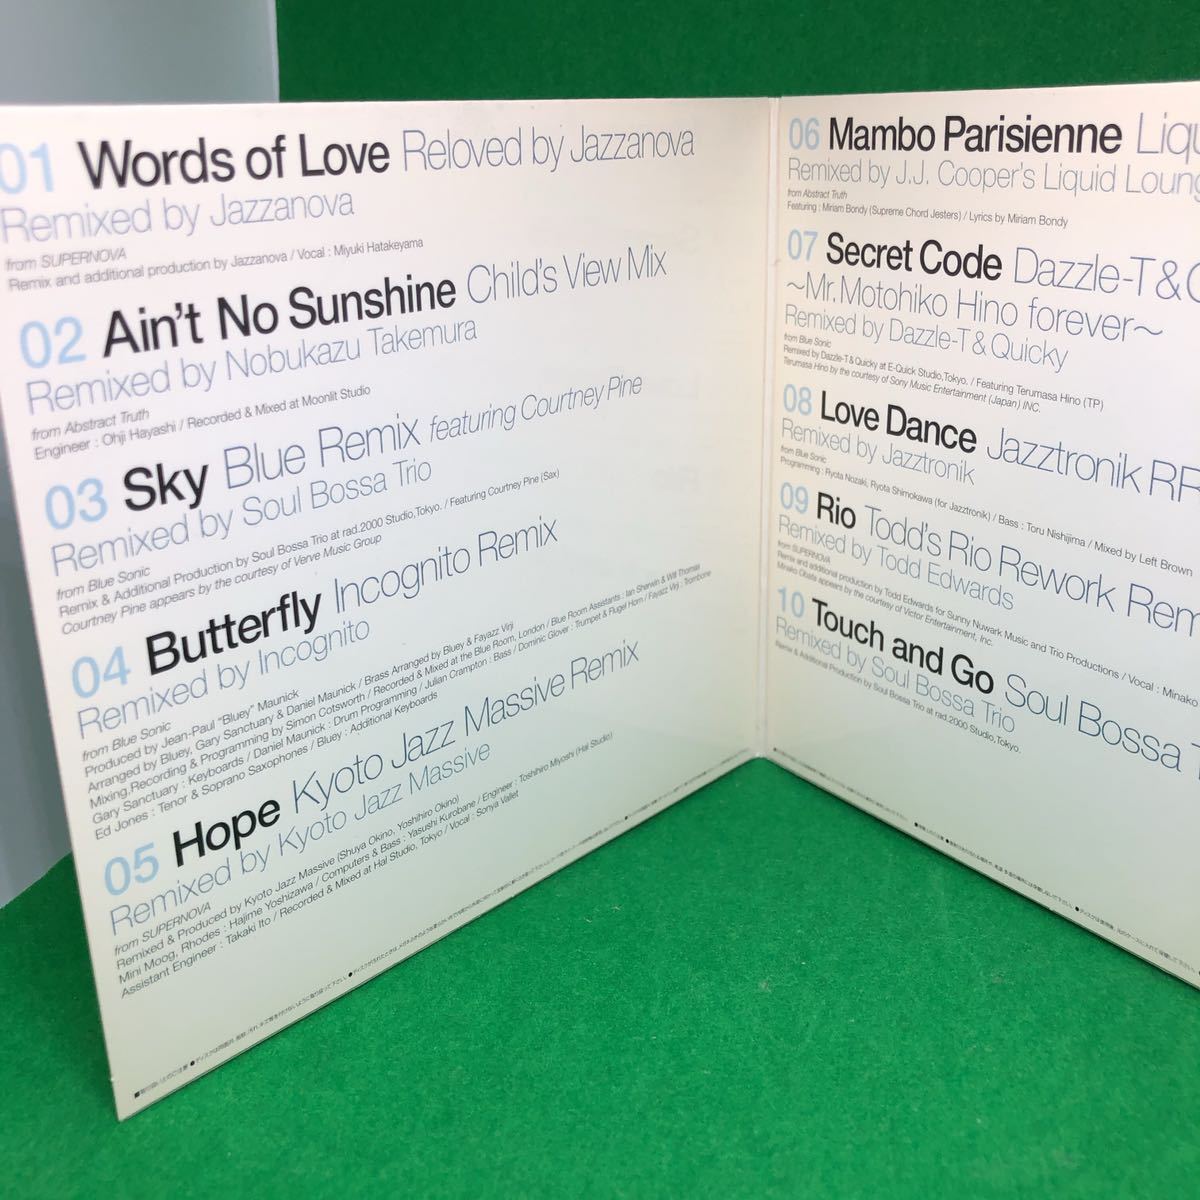 SOUL BOSSA TRIO■CD3枚セット　Best Remixes 1993-2000 　Blue Sonic　 Nature Vision 　ソウル・ボッサ・トリオ